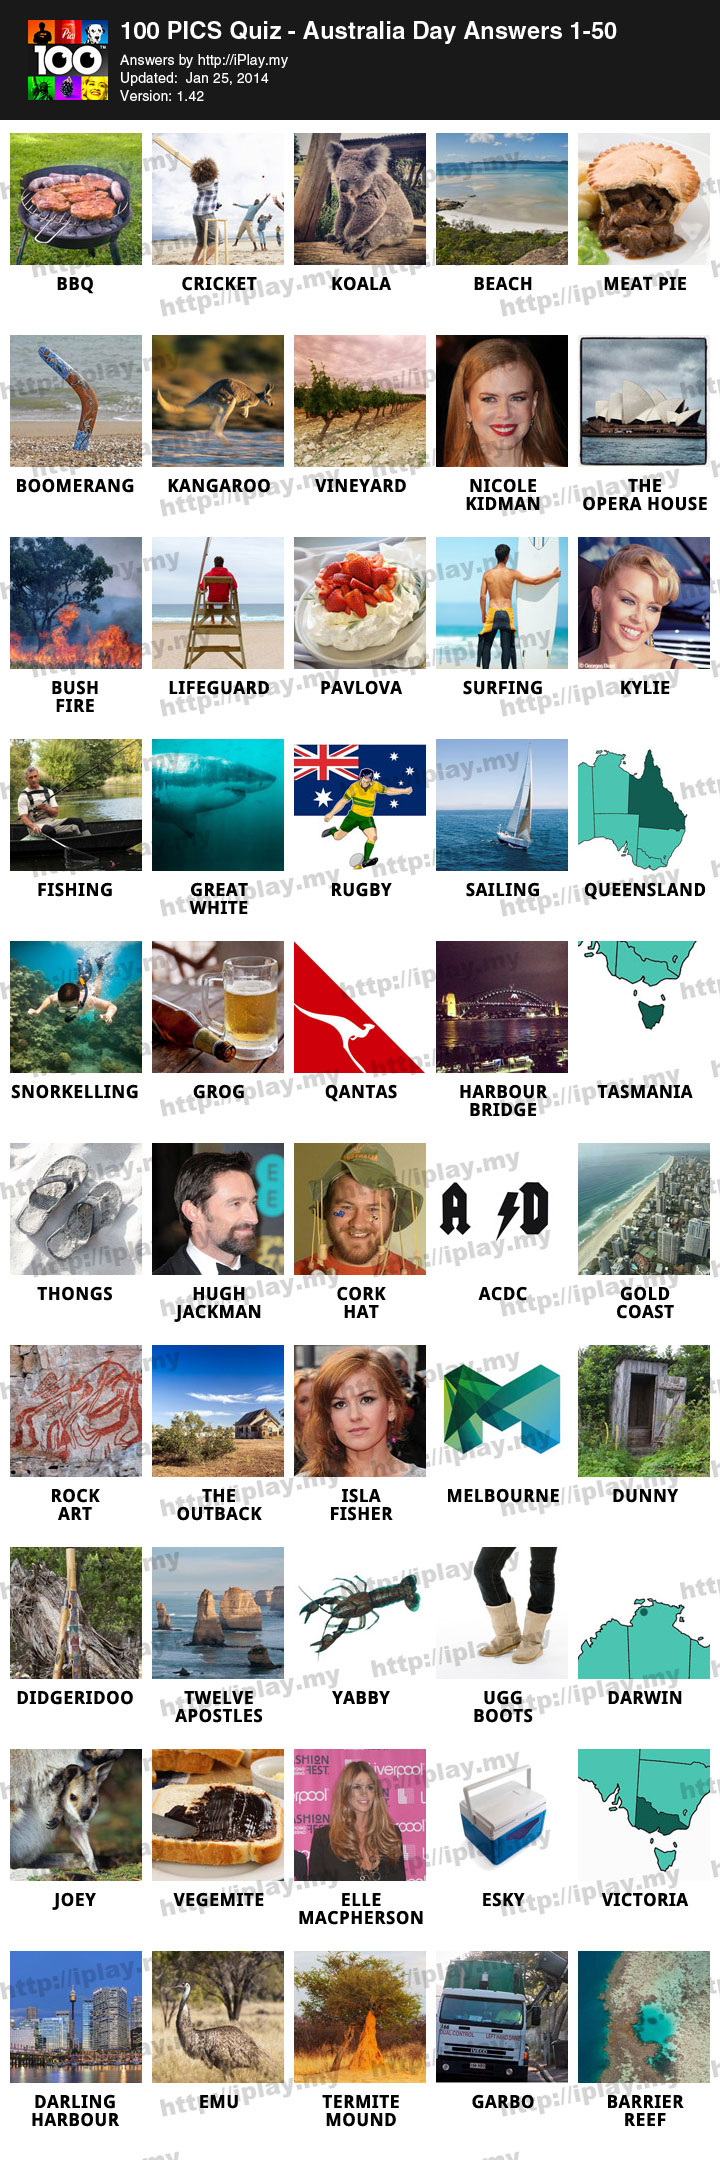 100-Pics-Quiz-Australia-Day-Answers-1-50